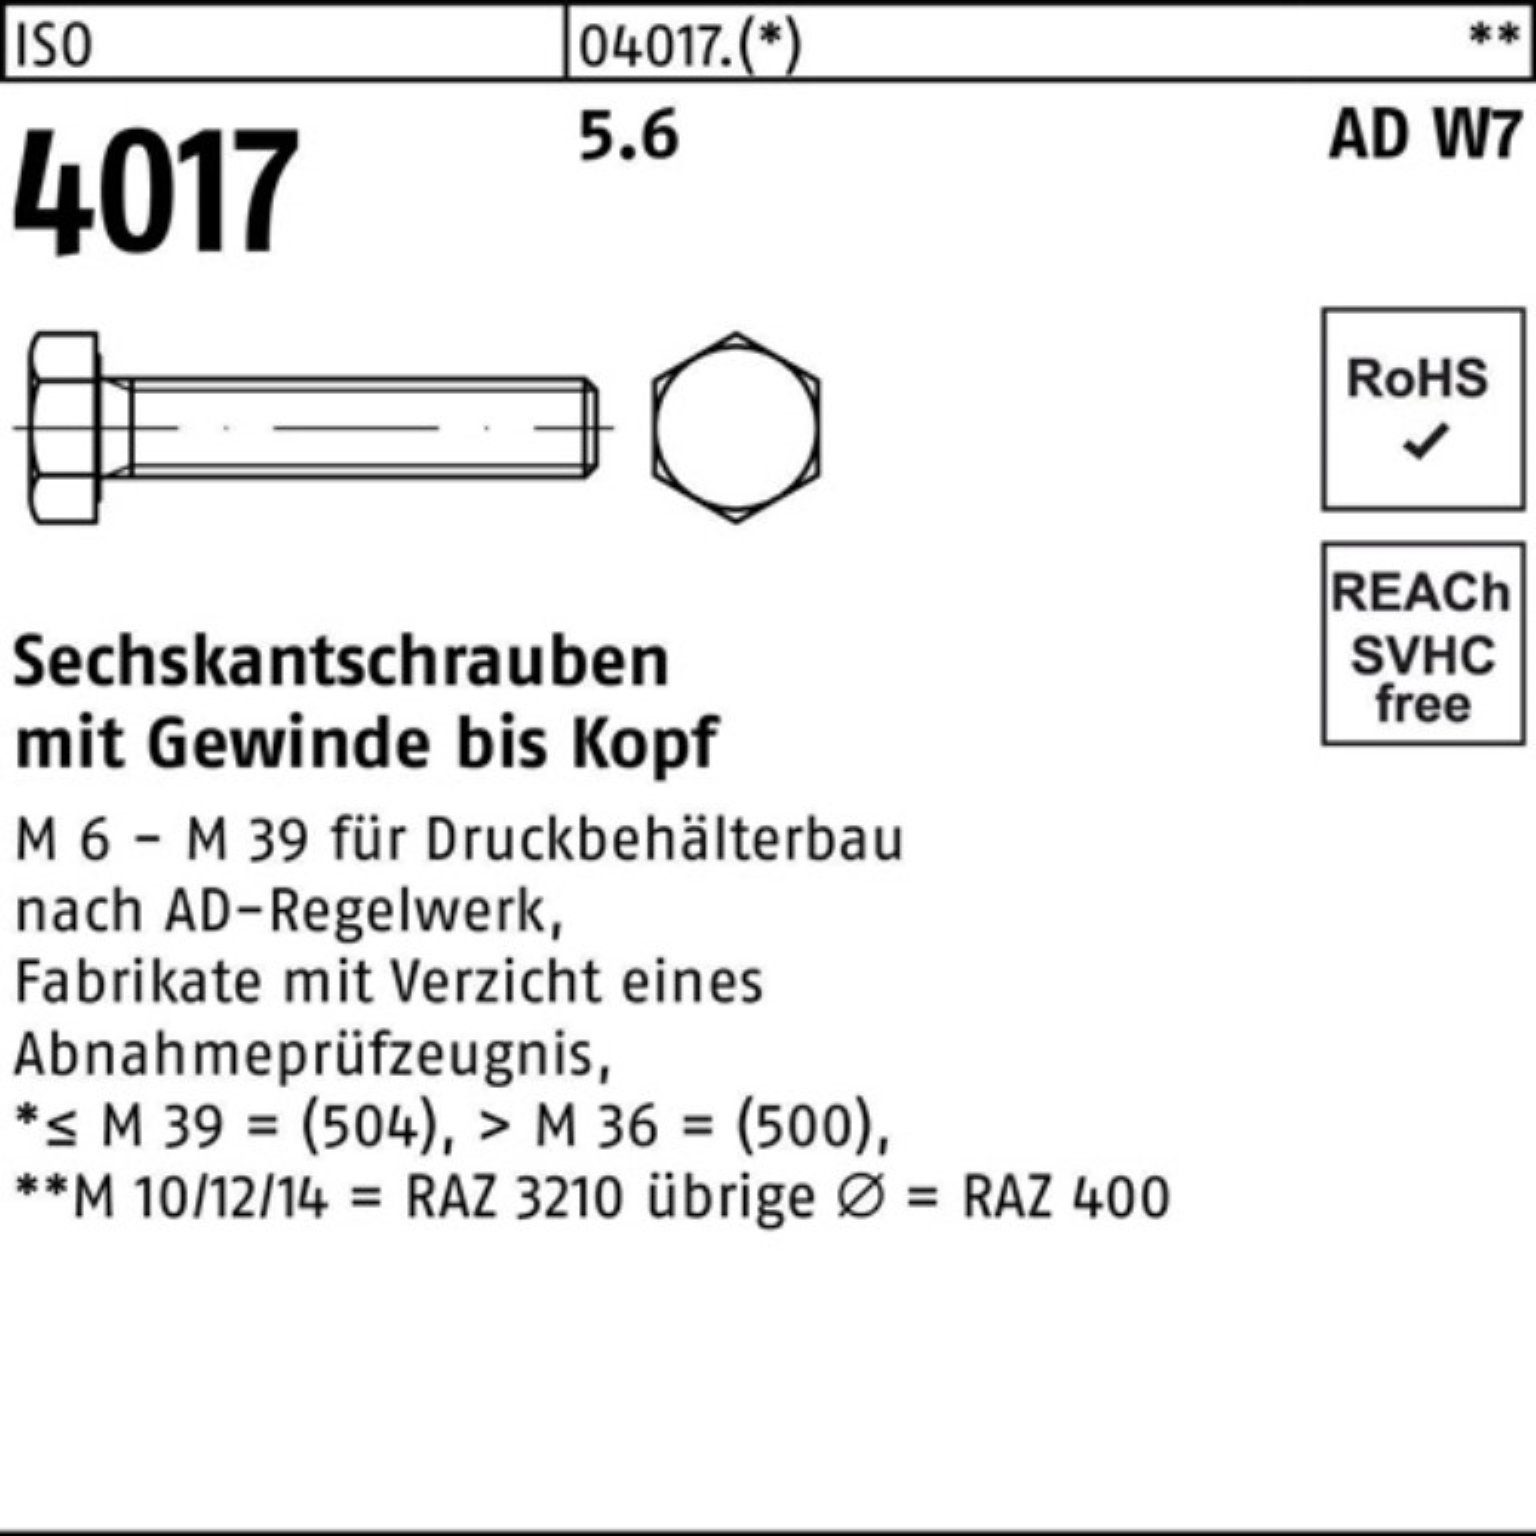 Bufab Sechskantschraube W7 VG Stück 5.6 M30x Pack 1 I ISO 4017 100er AD Sechskantschraube 110